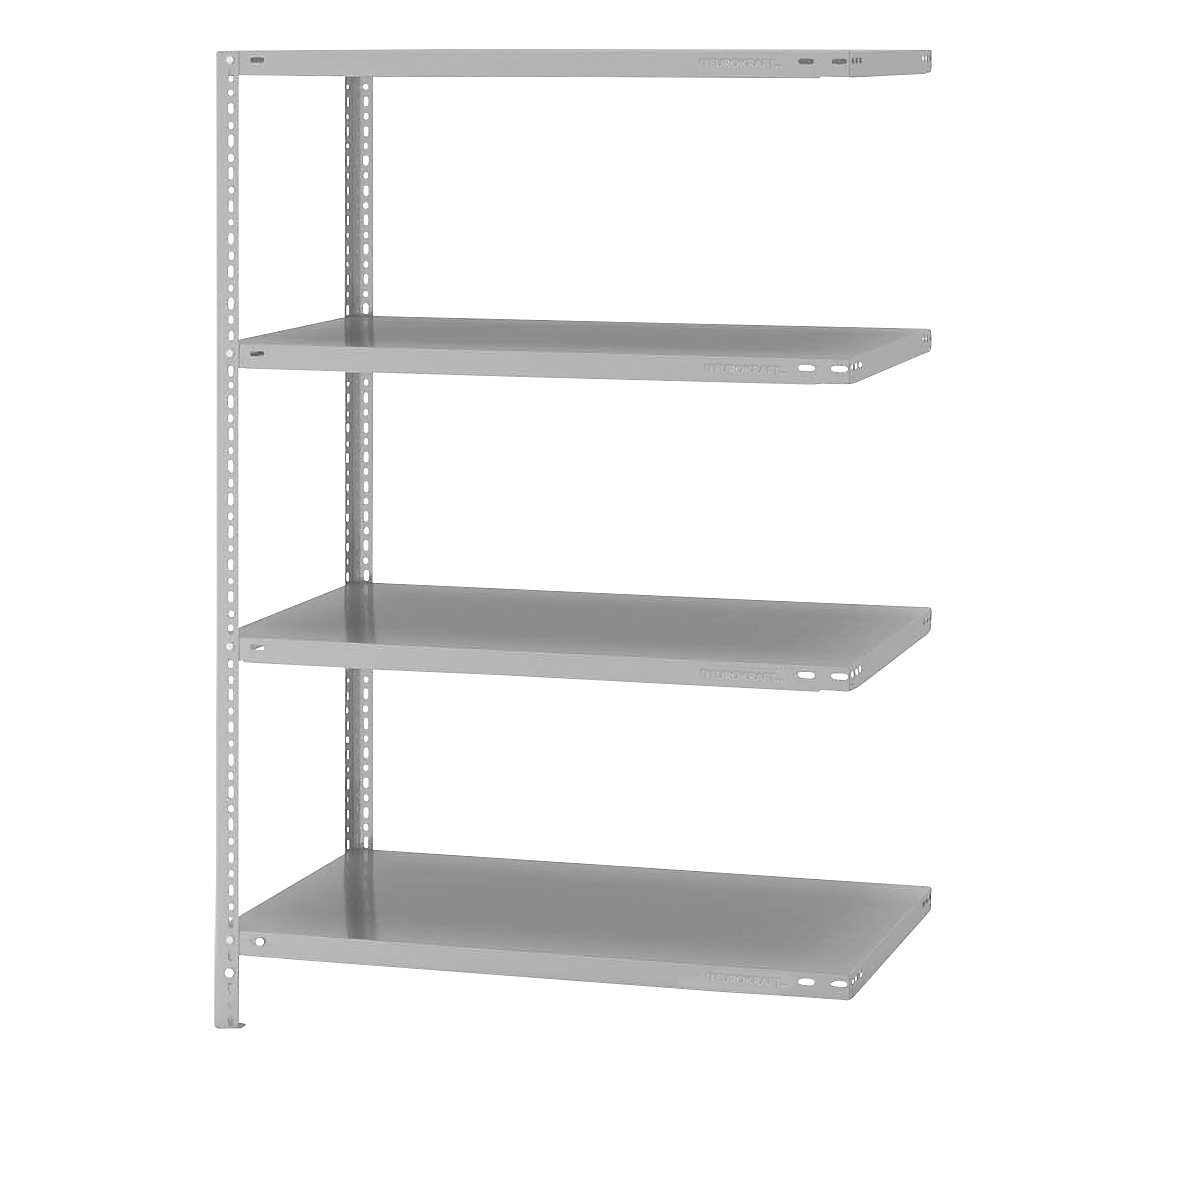 Bolt-together shelf unit, light duty, plastic coated – eurokraft pro, shelf unit height 1500 mm, shelf width 1000 mm, depth 600 mm, extension shelf unit-5